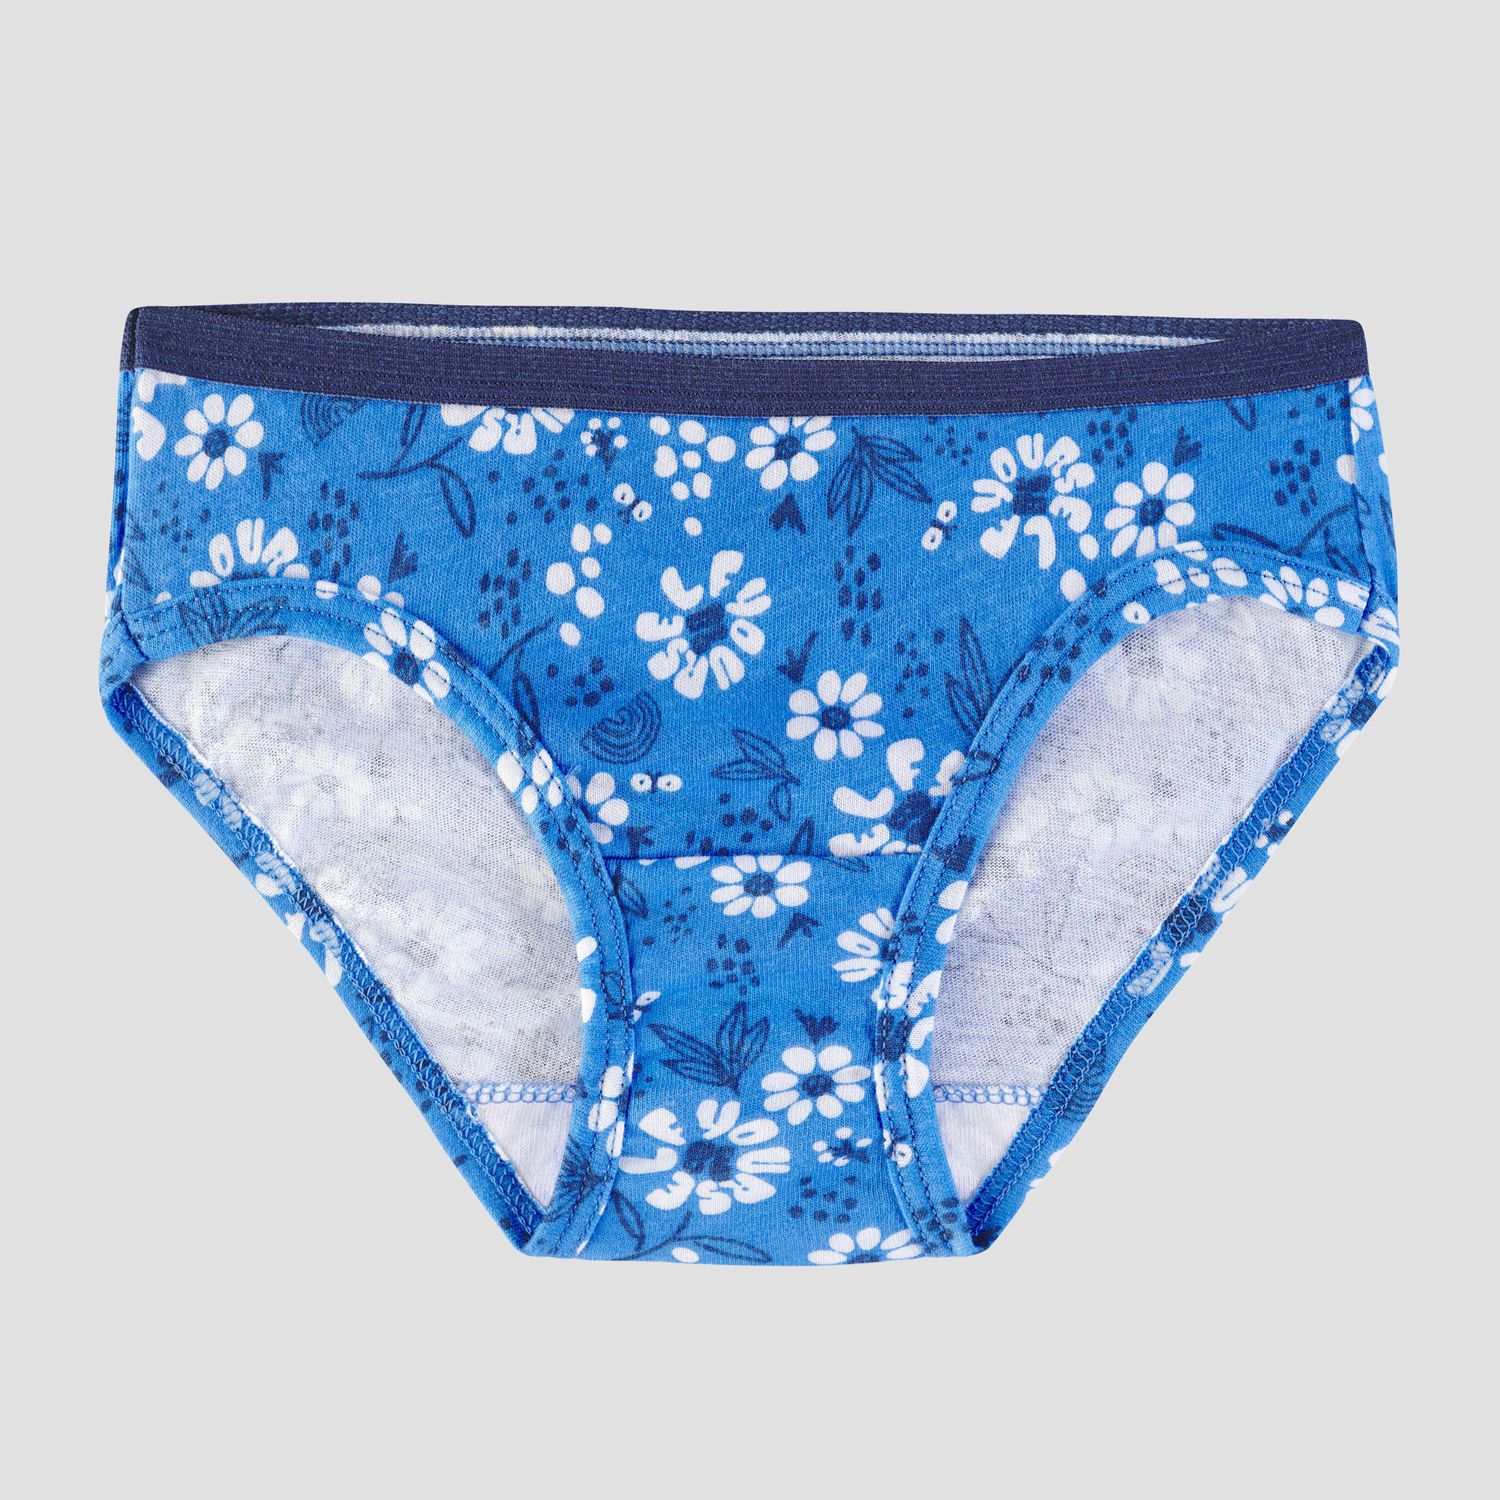 Women Hipster Panty Combo Briefs/Underwear , Women Panty Hipster Flower  Print panties For Women/Girls Pack